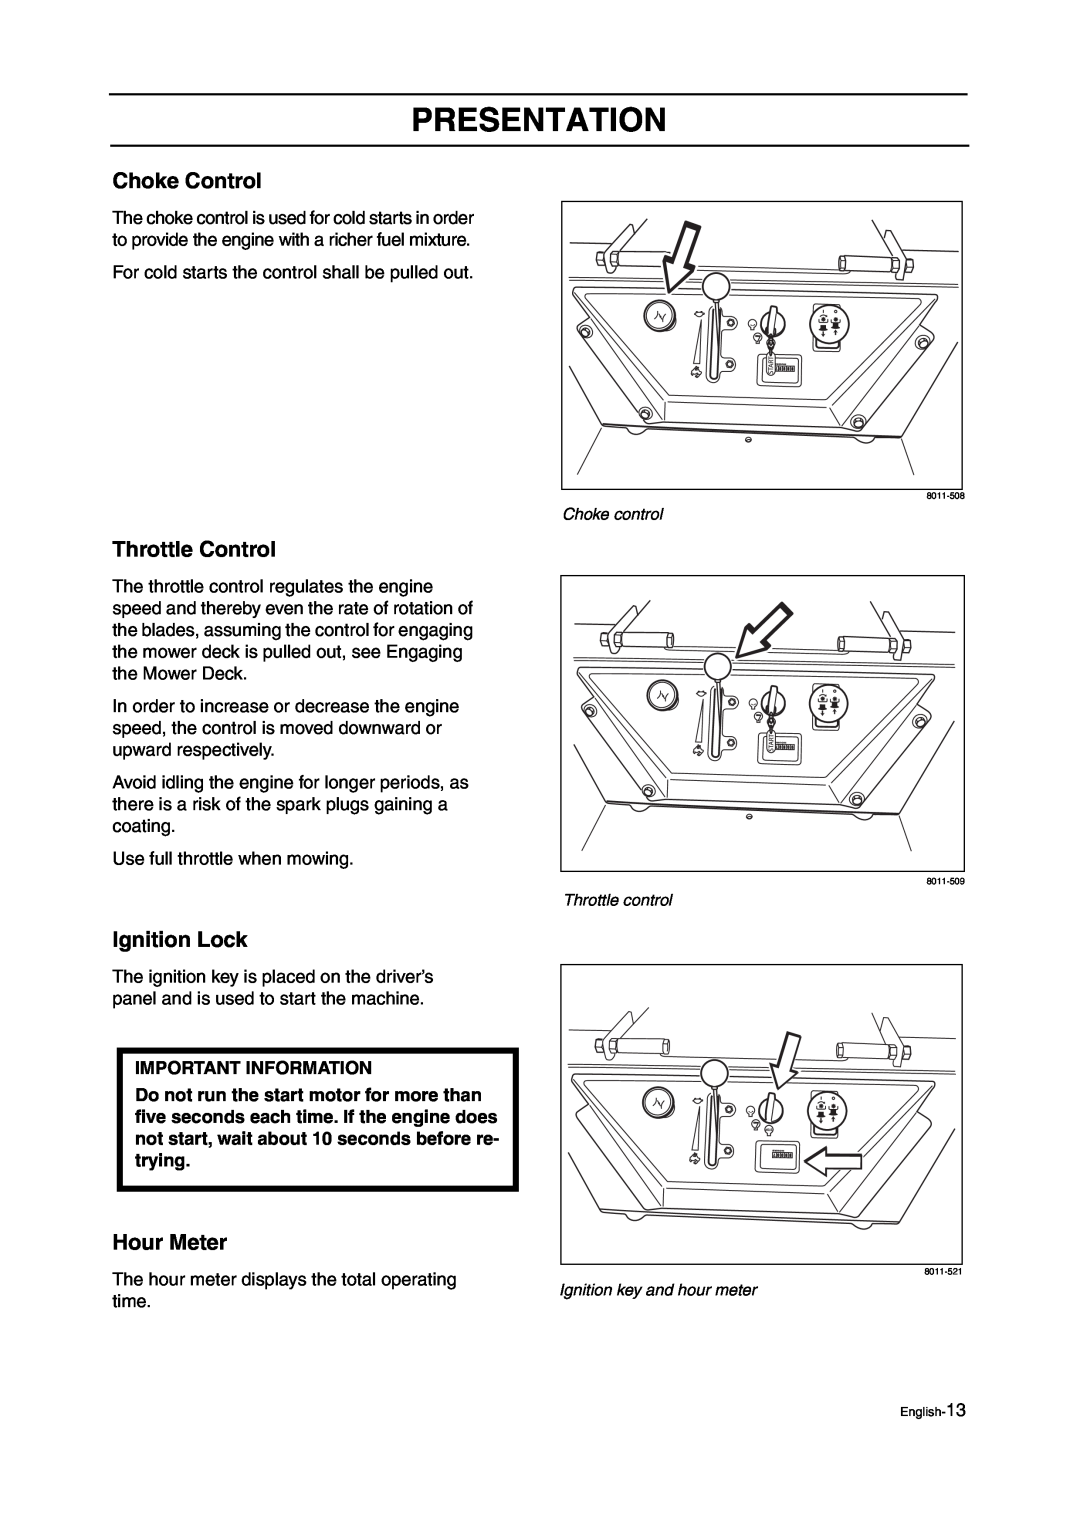 Husqvarna ZTH manual Choke Control, Throttle Control, Ignition Lock, Hour Meter, Presentation, Important Information 